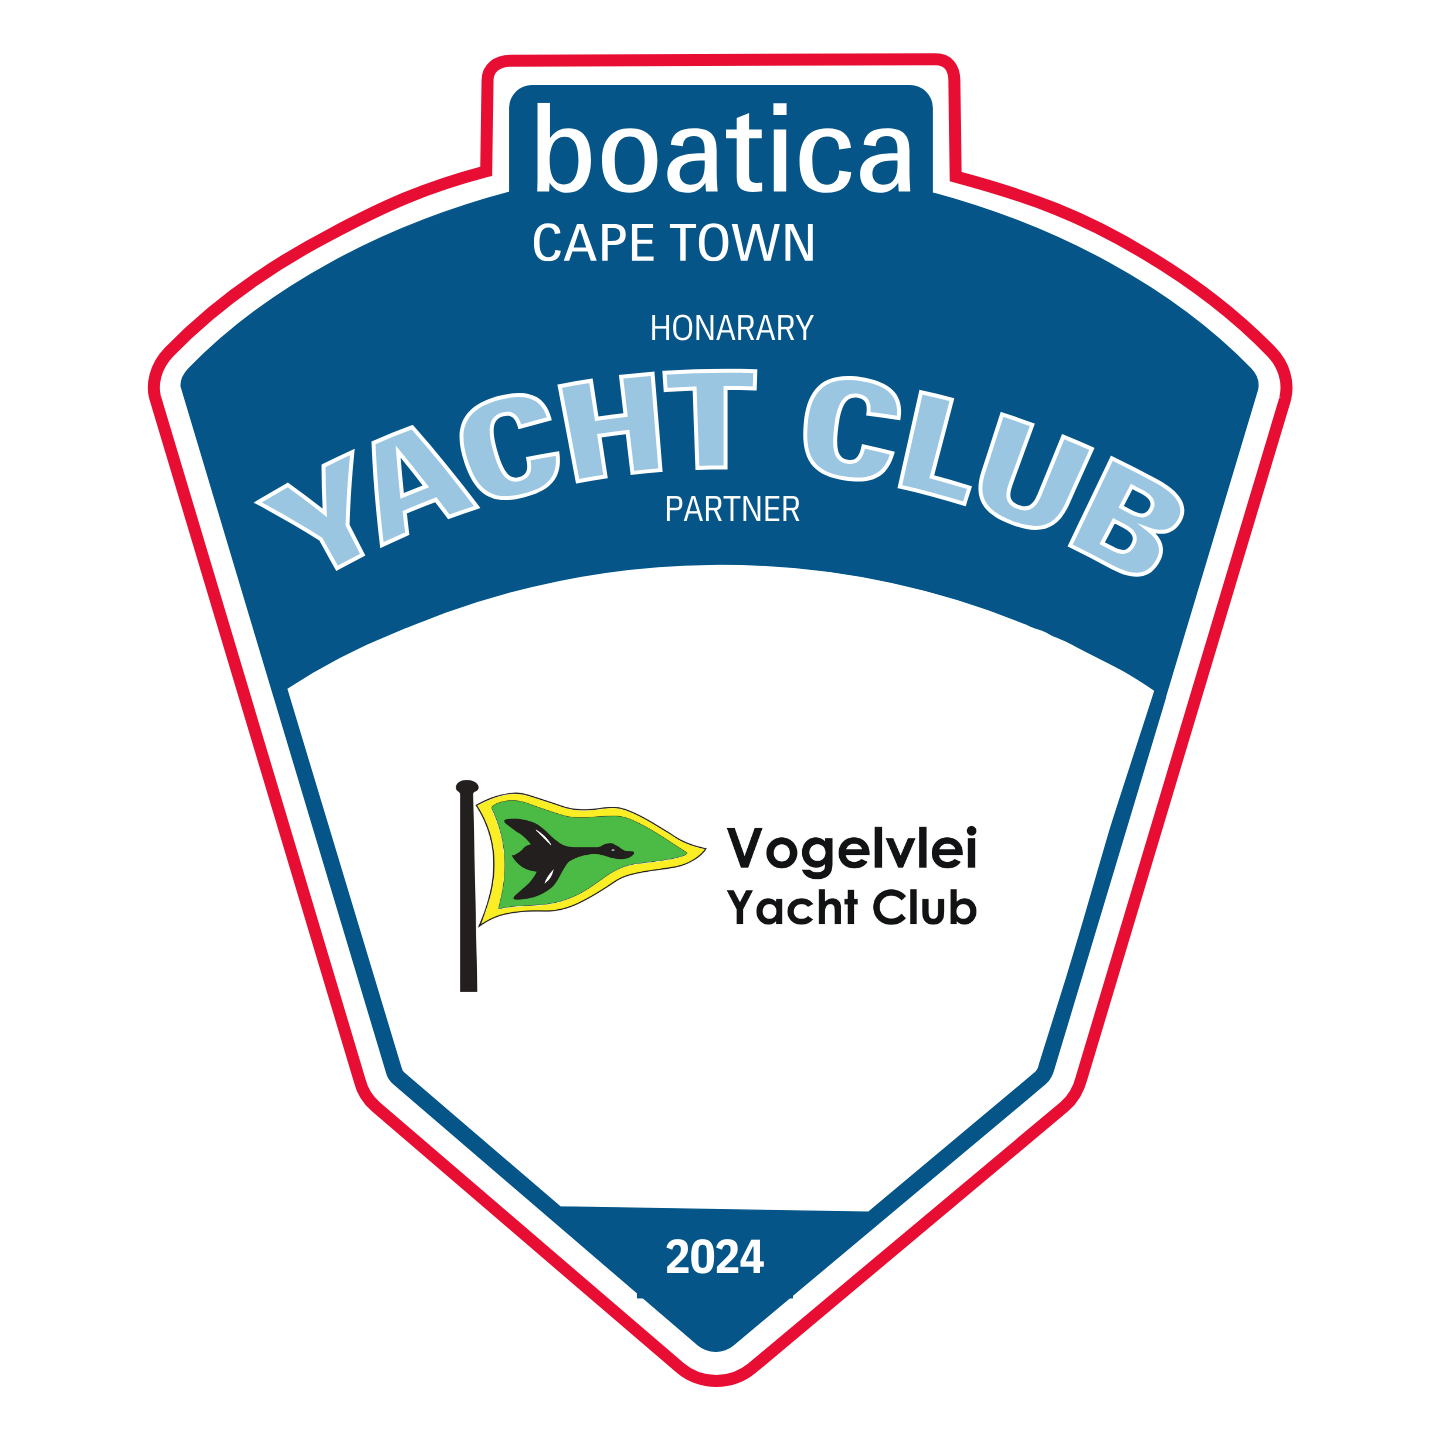 Boatica honorary yacht club partner logo.ai - 5